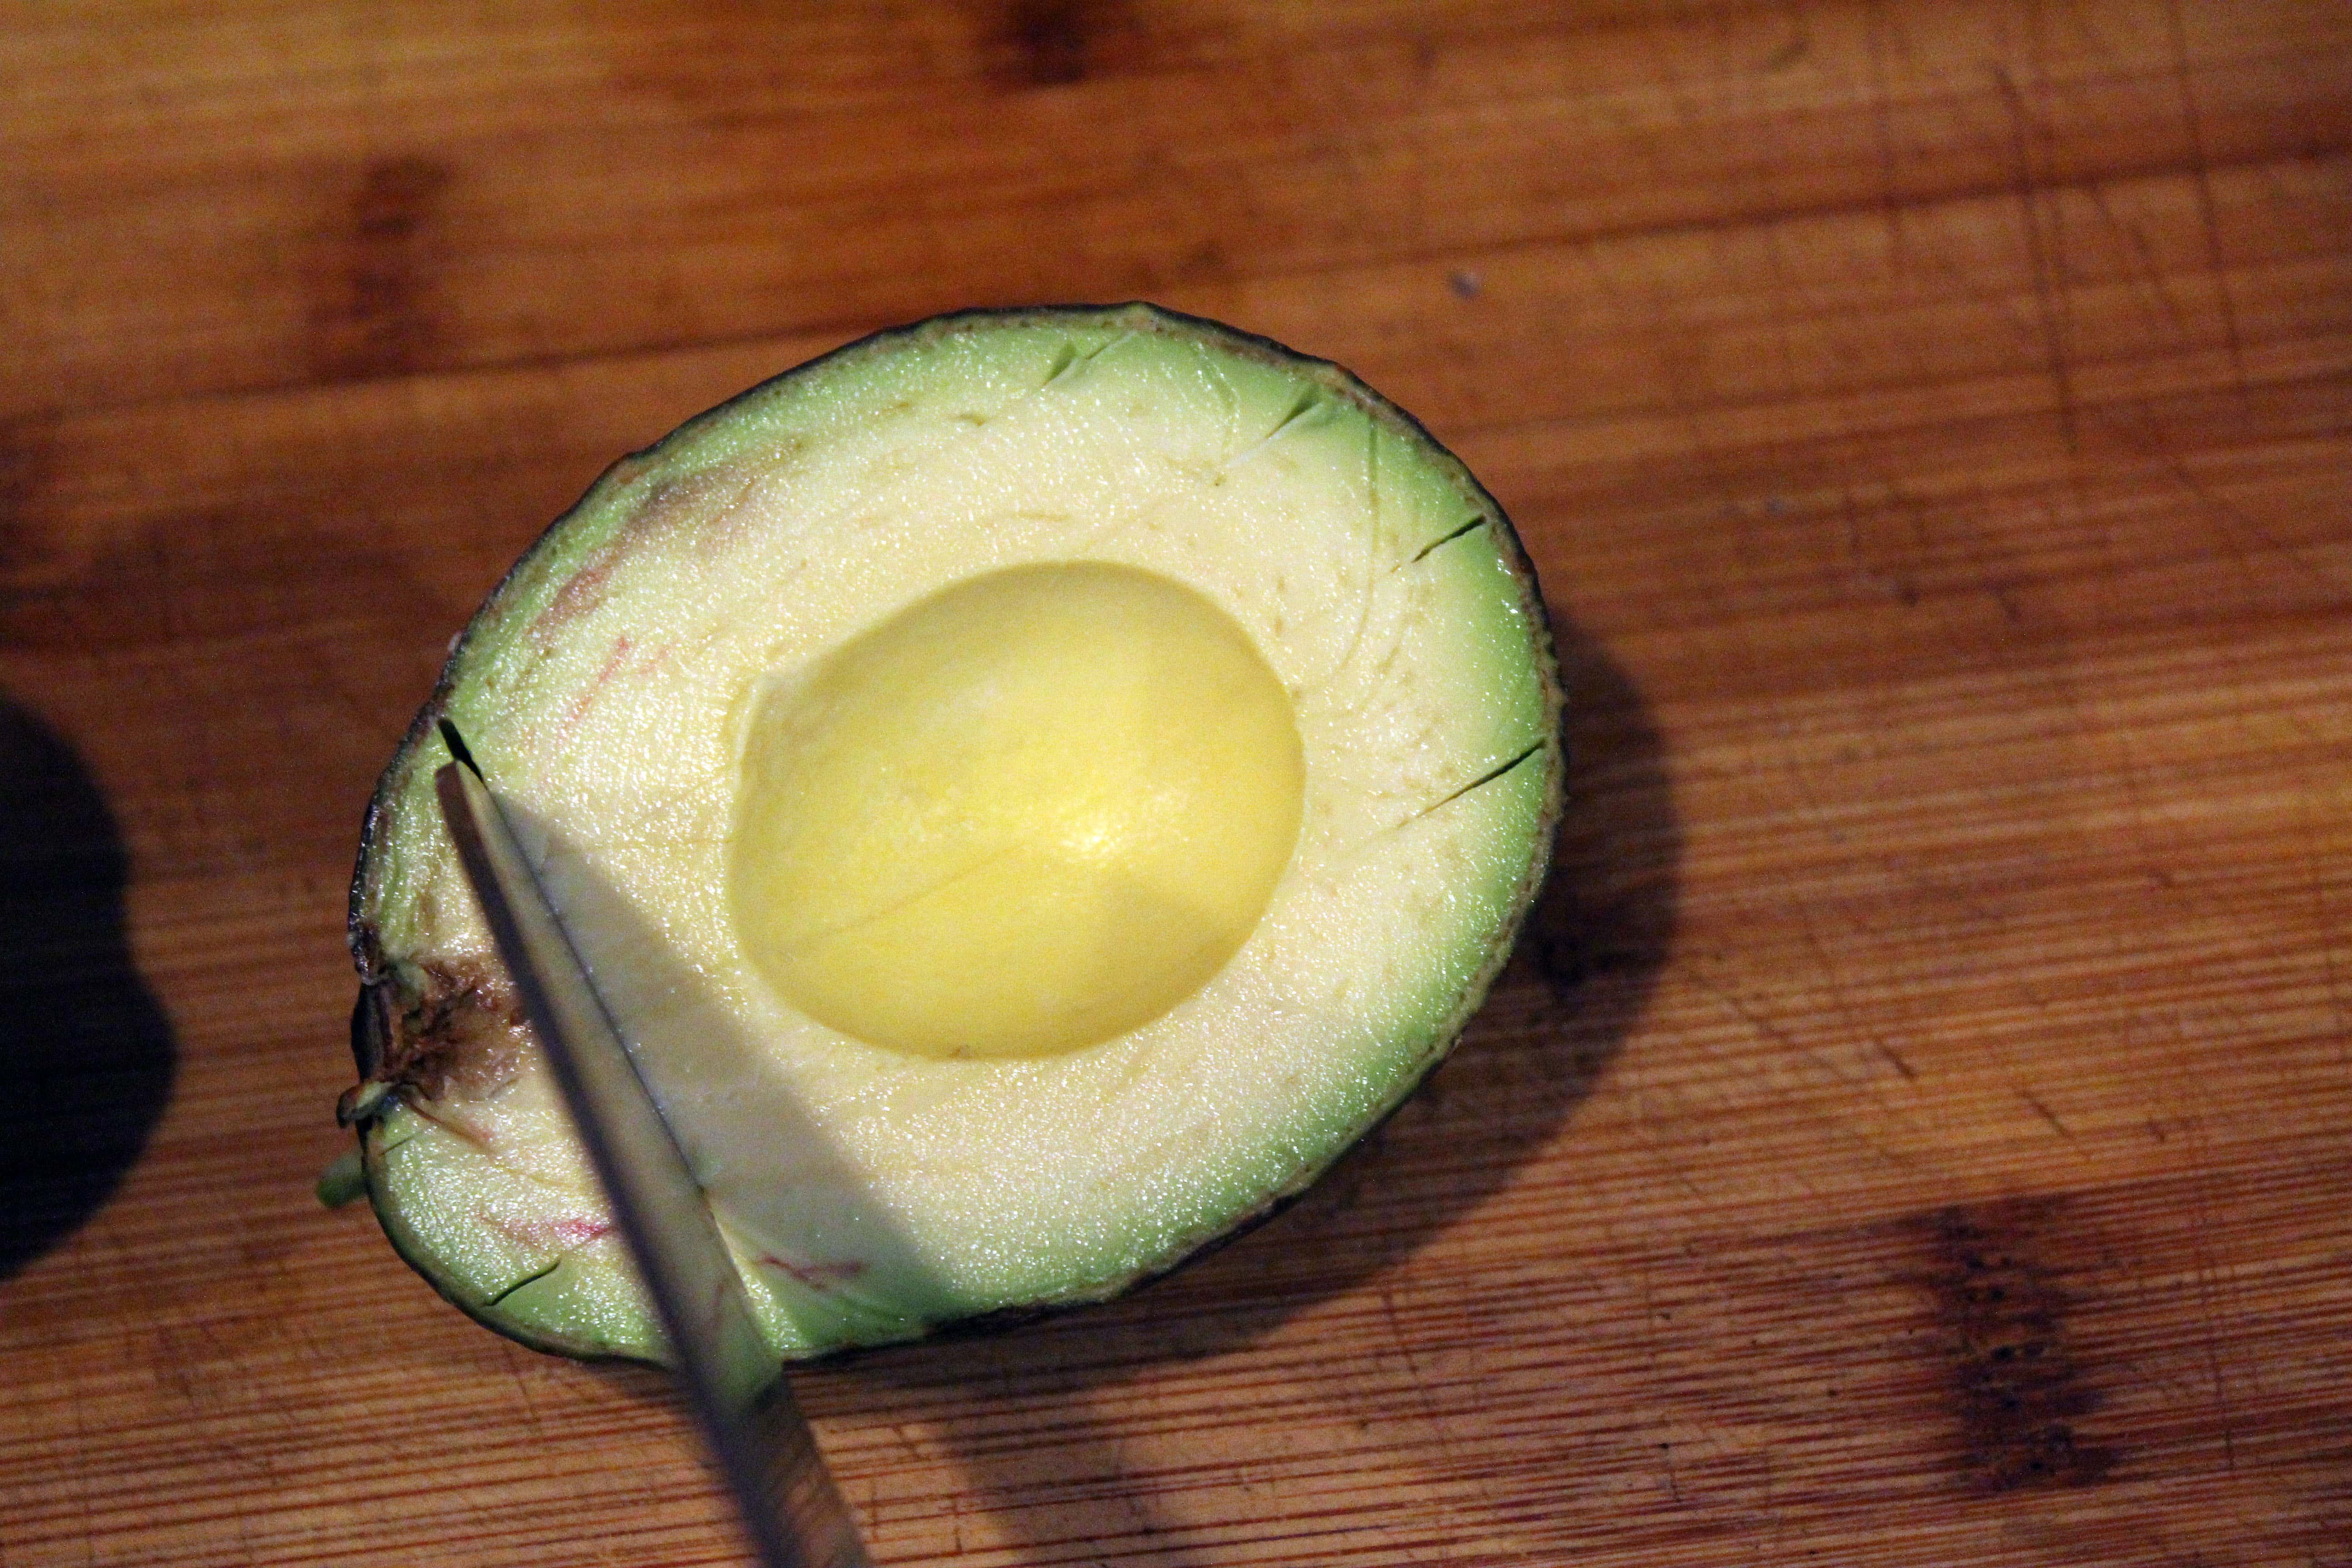 Score avocado to cut